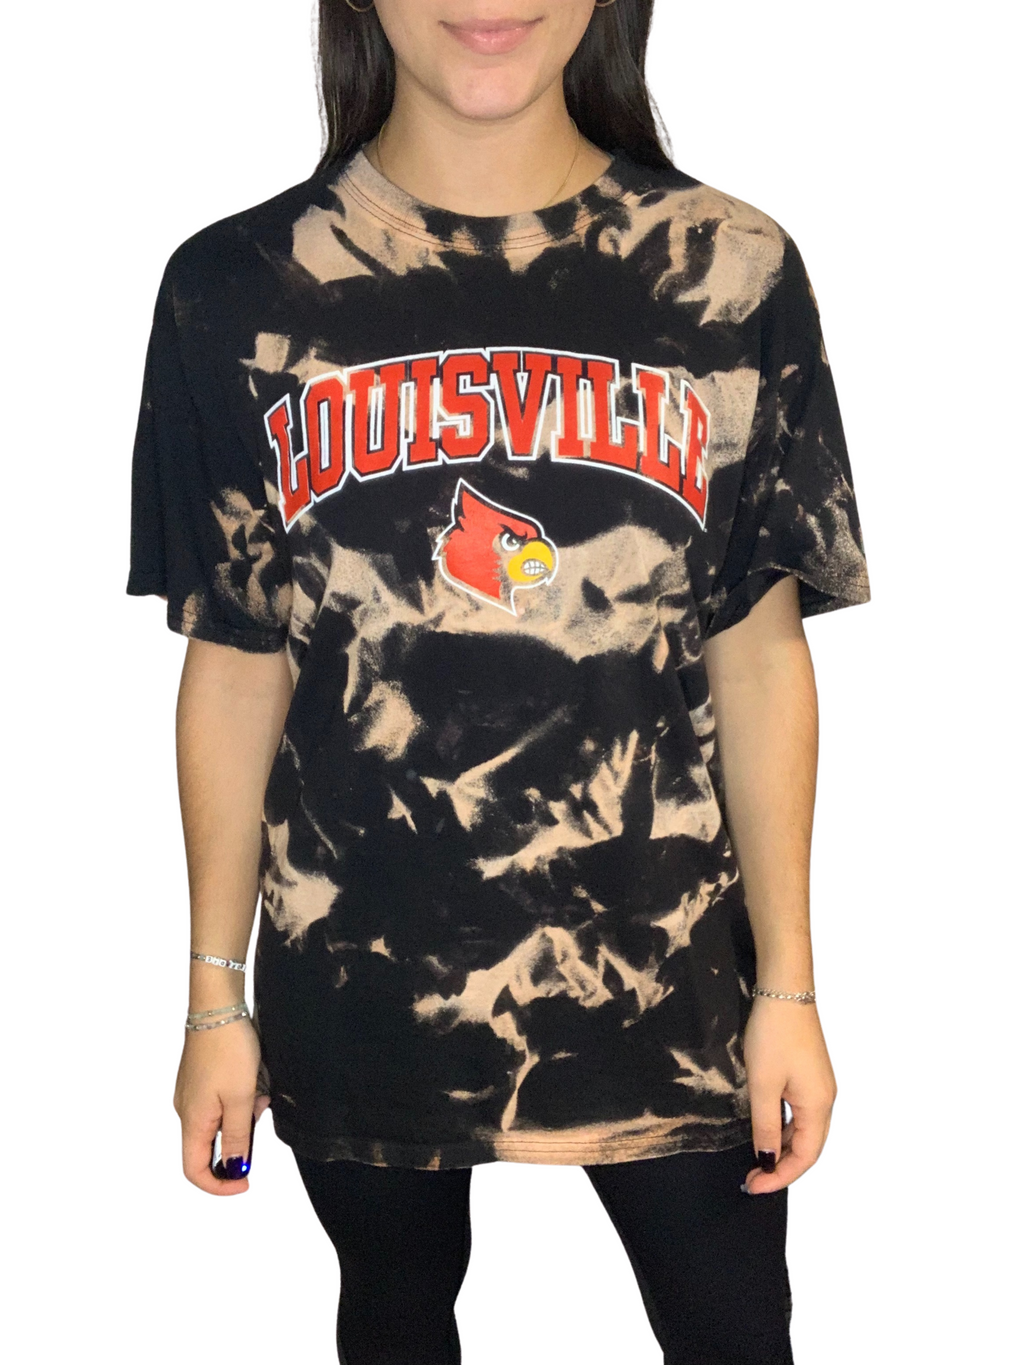 University of Louisville Bleached Shirt